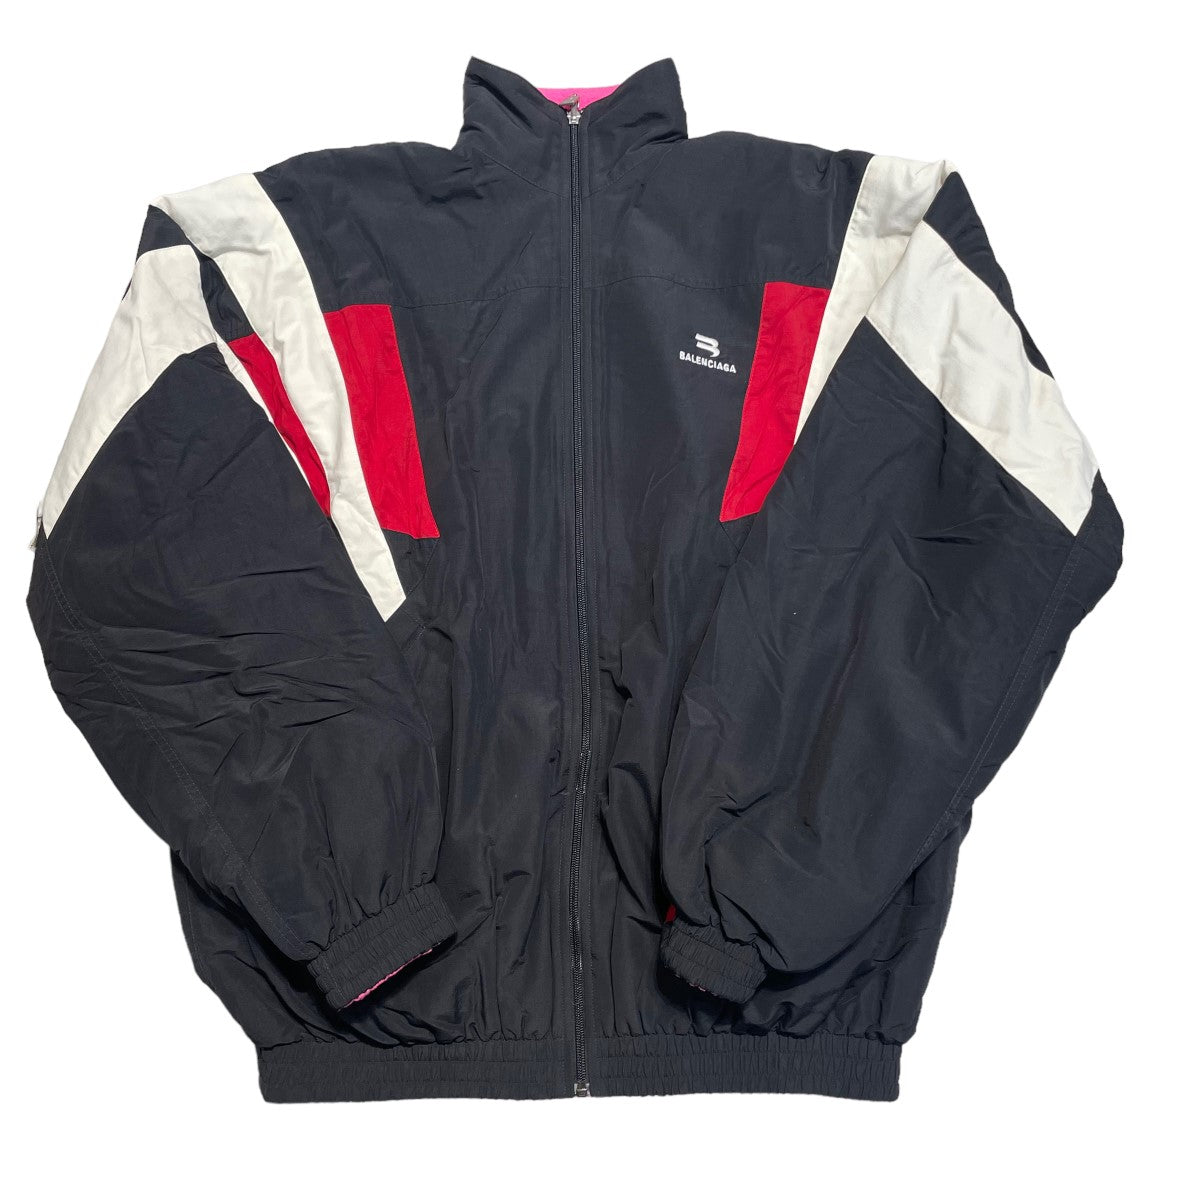 BALENCIAGA(バレンシアガ) sporty b reversible track jacket 681445 